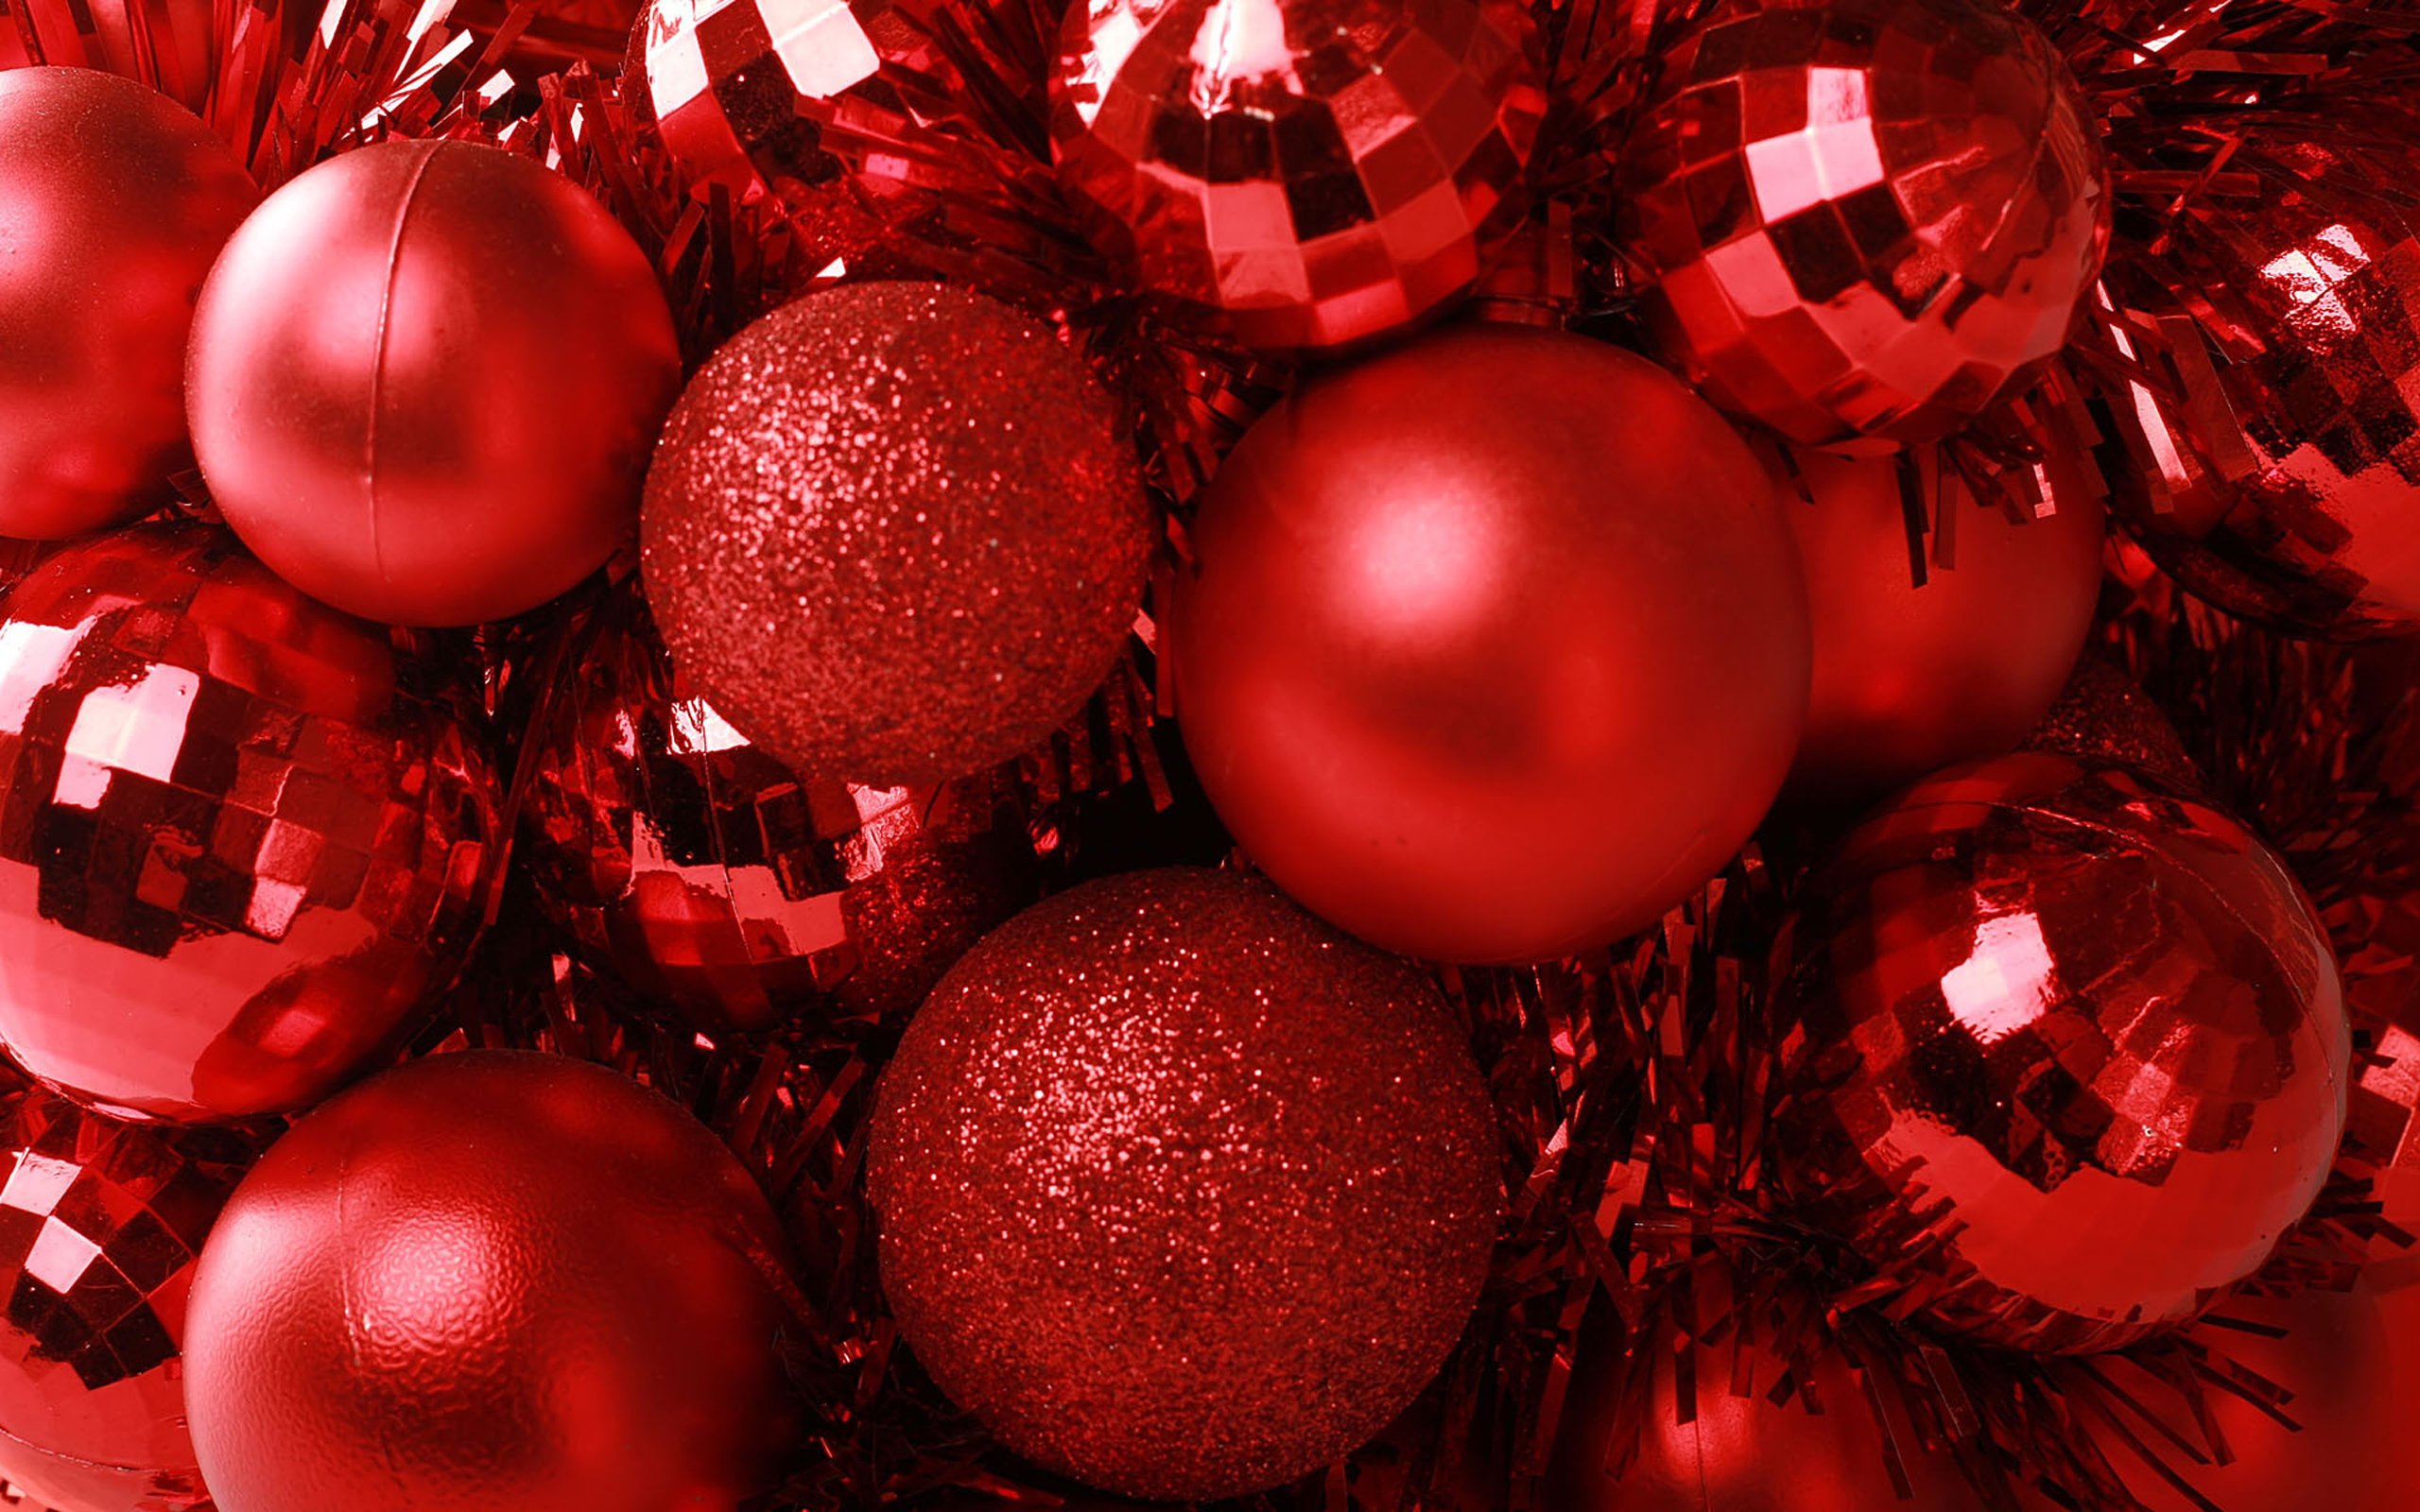 merry, Christmas, Holiday, Vacation, Gifts, Tree, Happy, Beautiful, Santa, Snowman, Lights Wallpaper